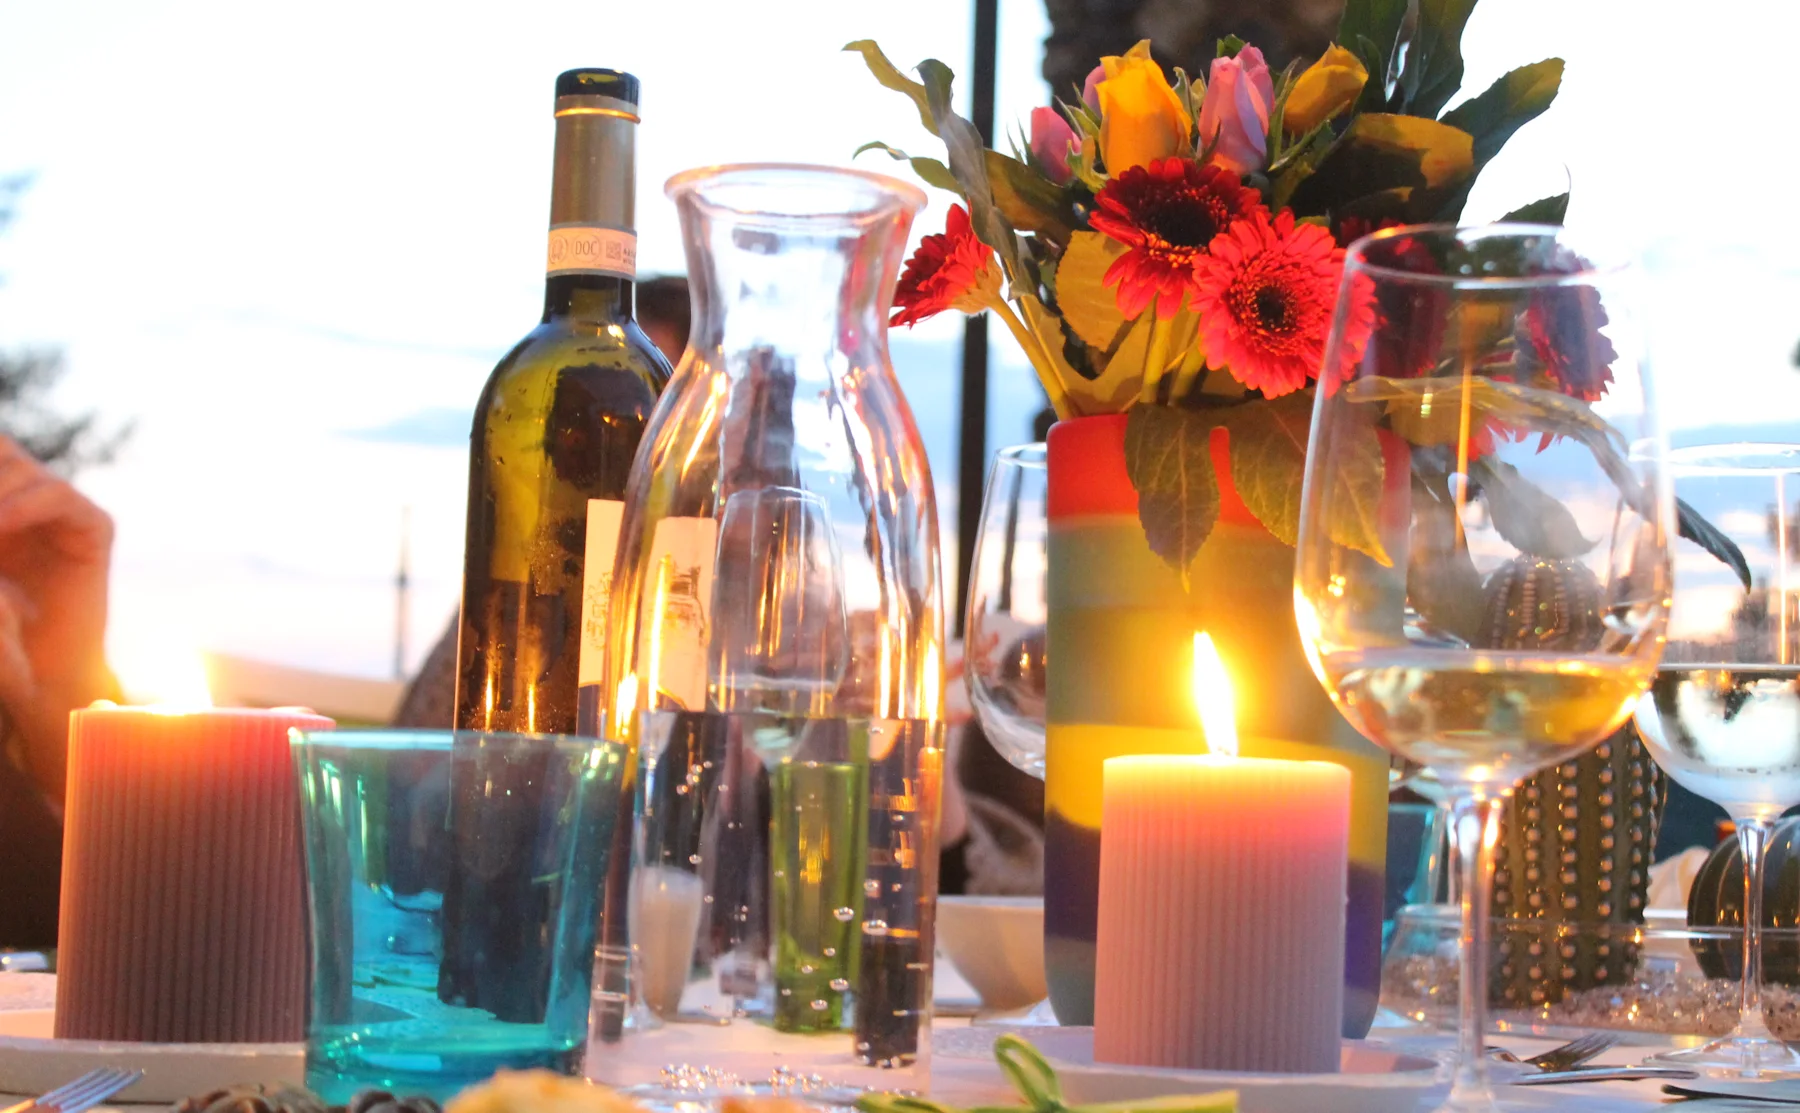 Dinner on the terrace overlooking the Ligurian sea - 988086